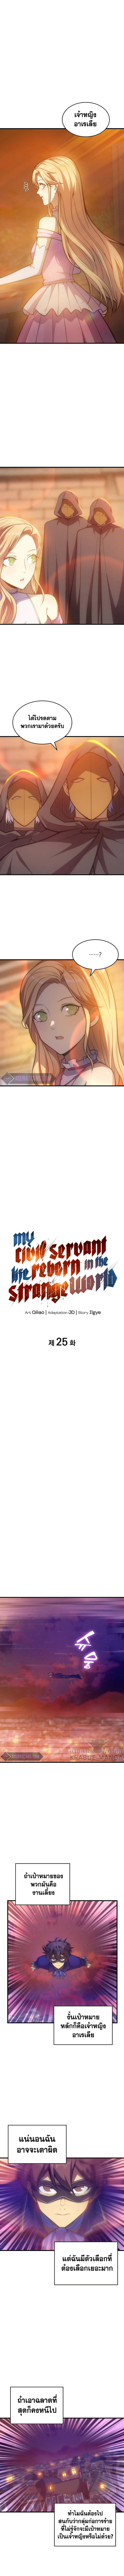 My Civil Servant Life Reborn in the Strange World 25 (2)